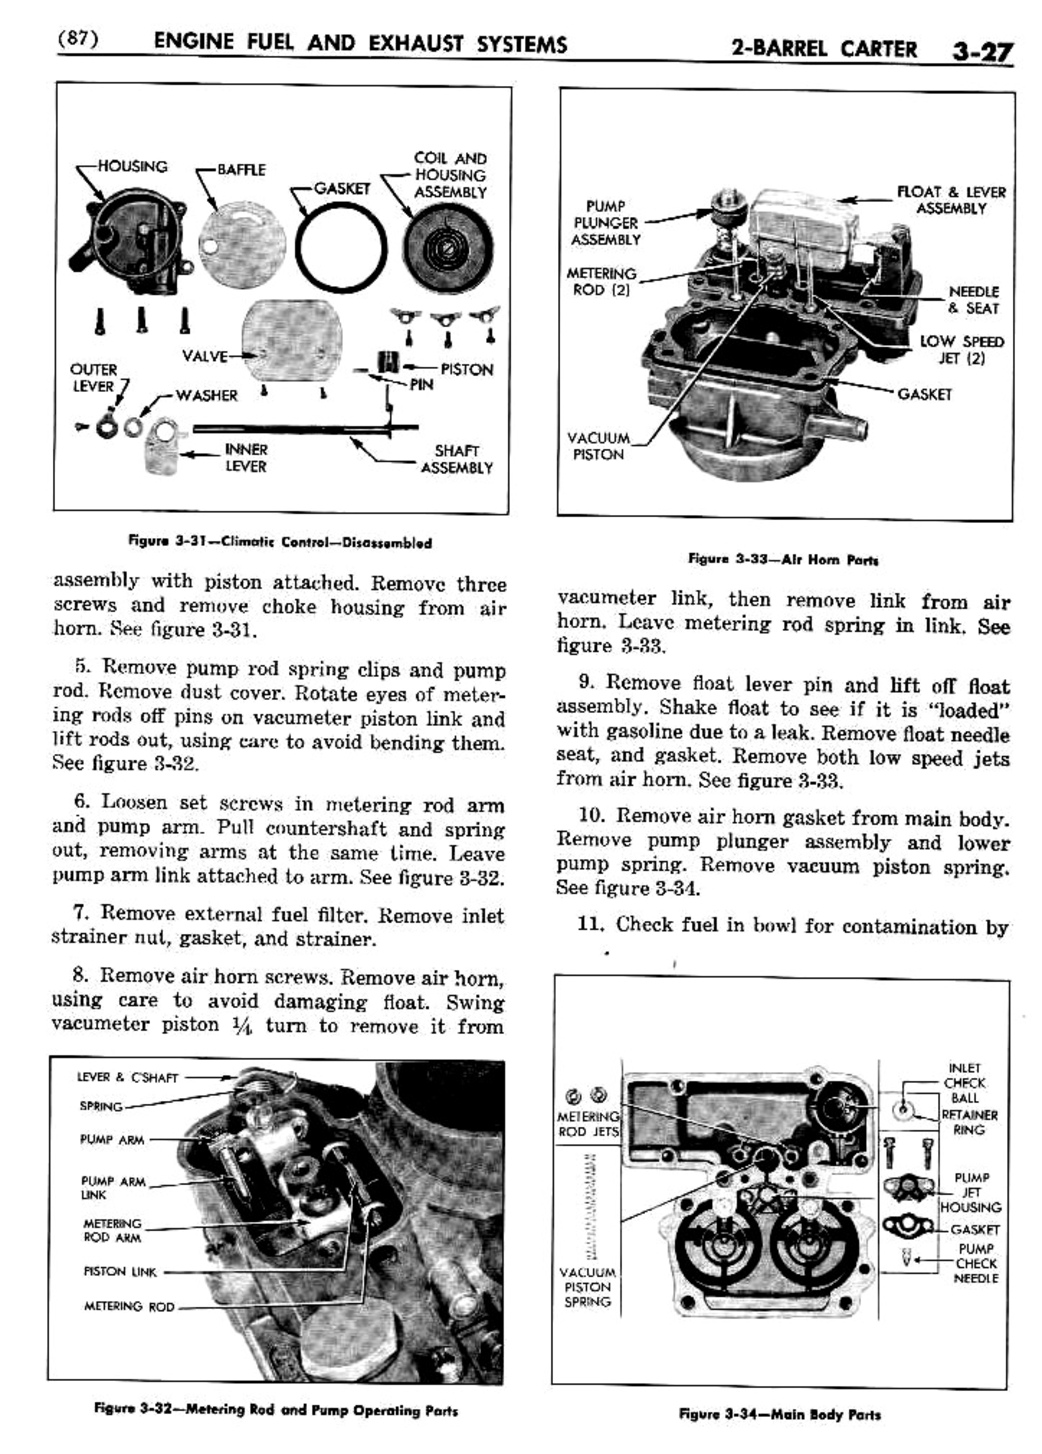 n_04 1956 Buick Shop Manual - Engine Fuel & Exhaust-027-027.jpg